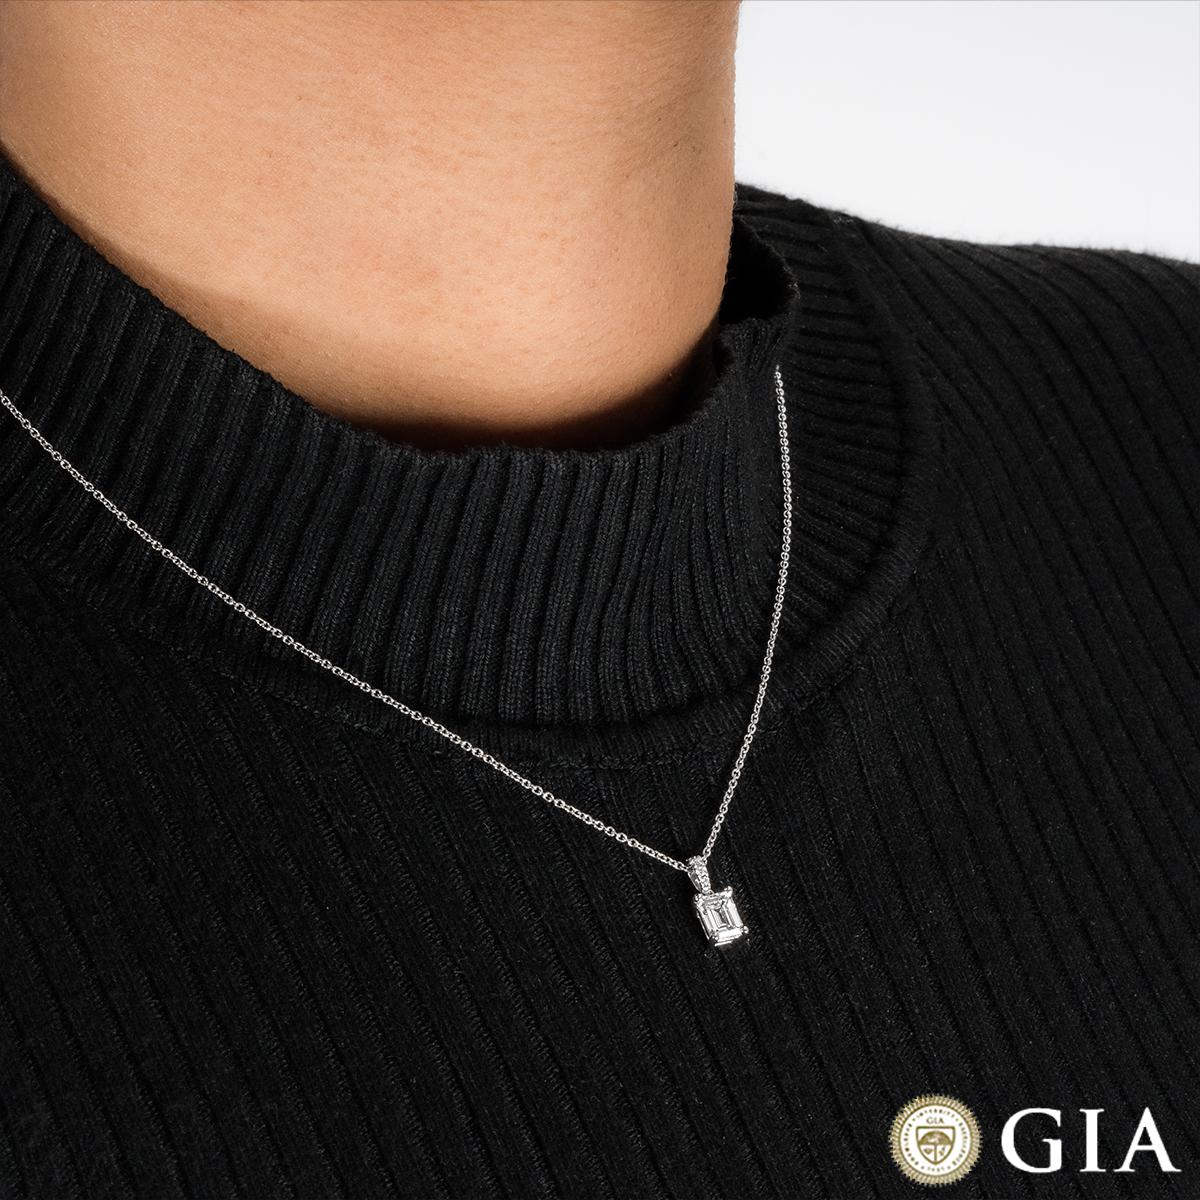 GIA Certified White Gold Emerald Cut Diamond Pendant 0.92 Carat G/SI1 For Sale 2